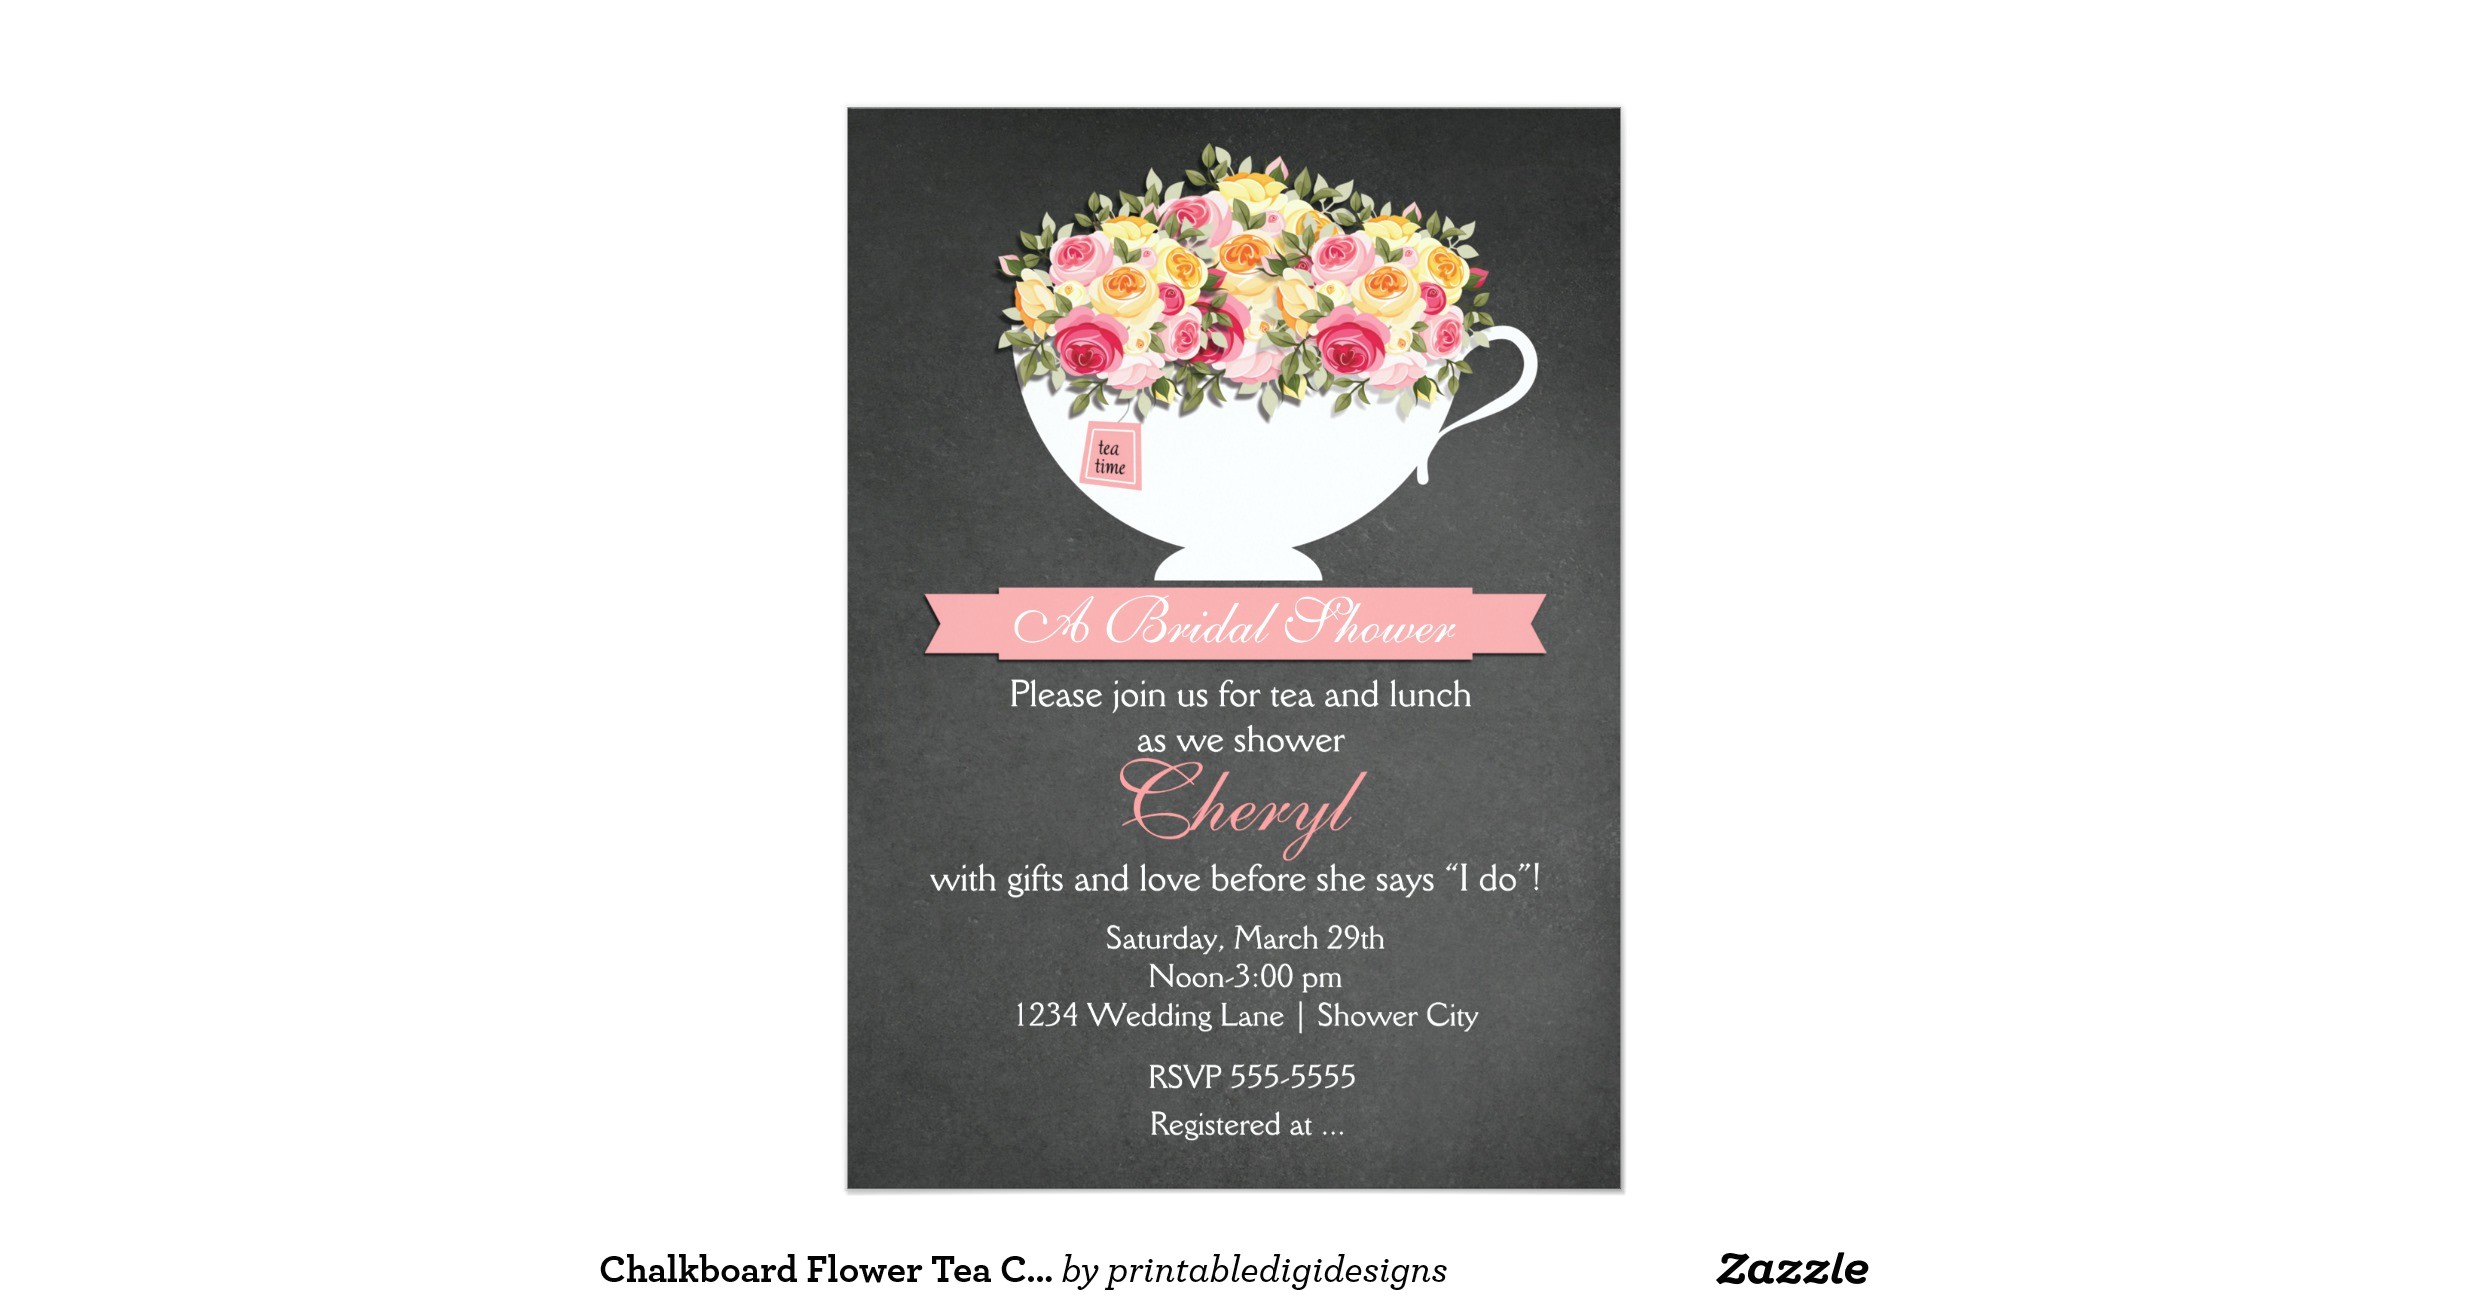 chalkboard flower tea cup bridal shower invitation 161451446810471924